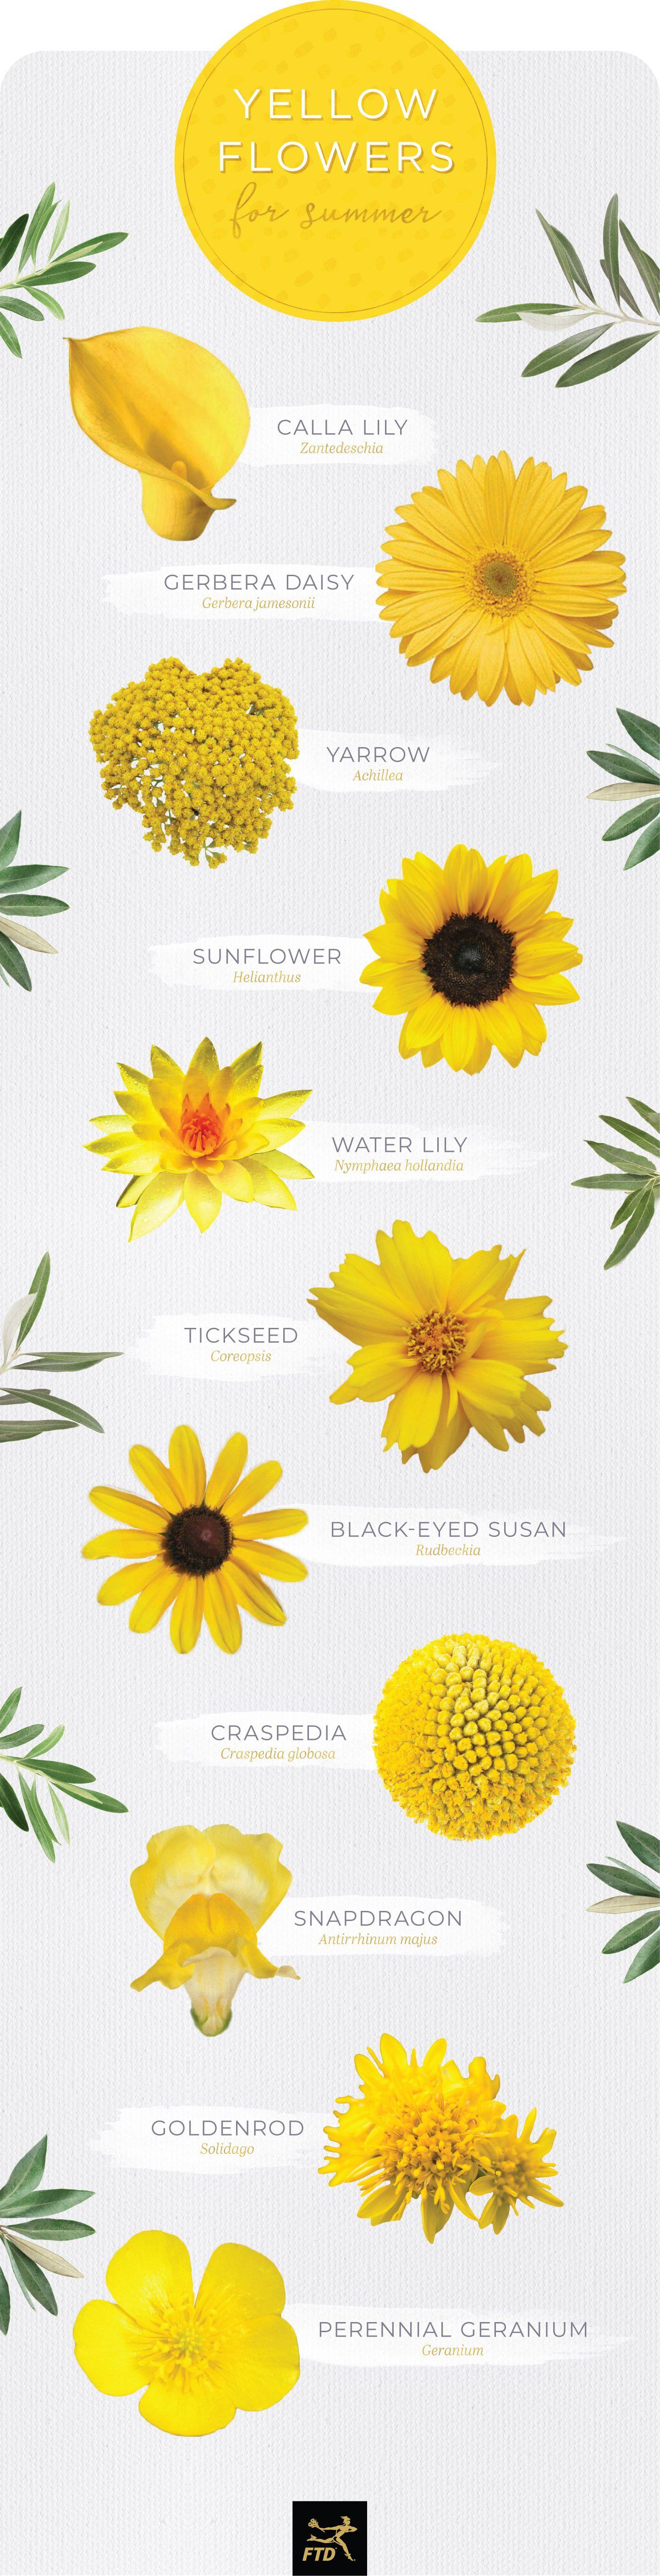 Big Yellow Flower Shaped Logo - 30 Types of Yellow Flowers - FTD.com